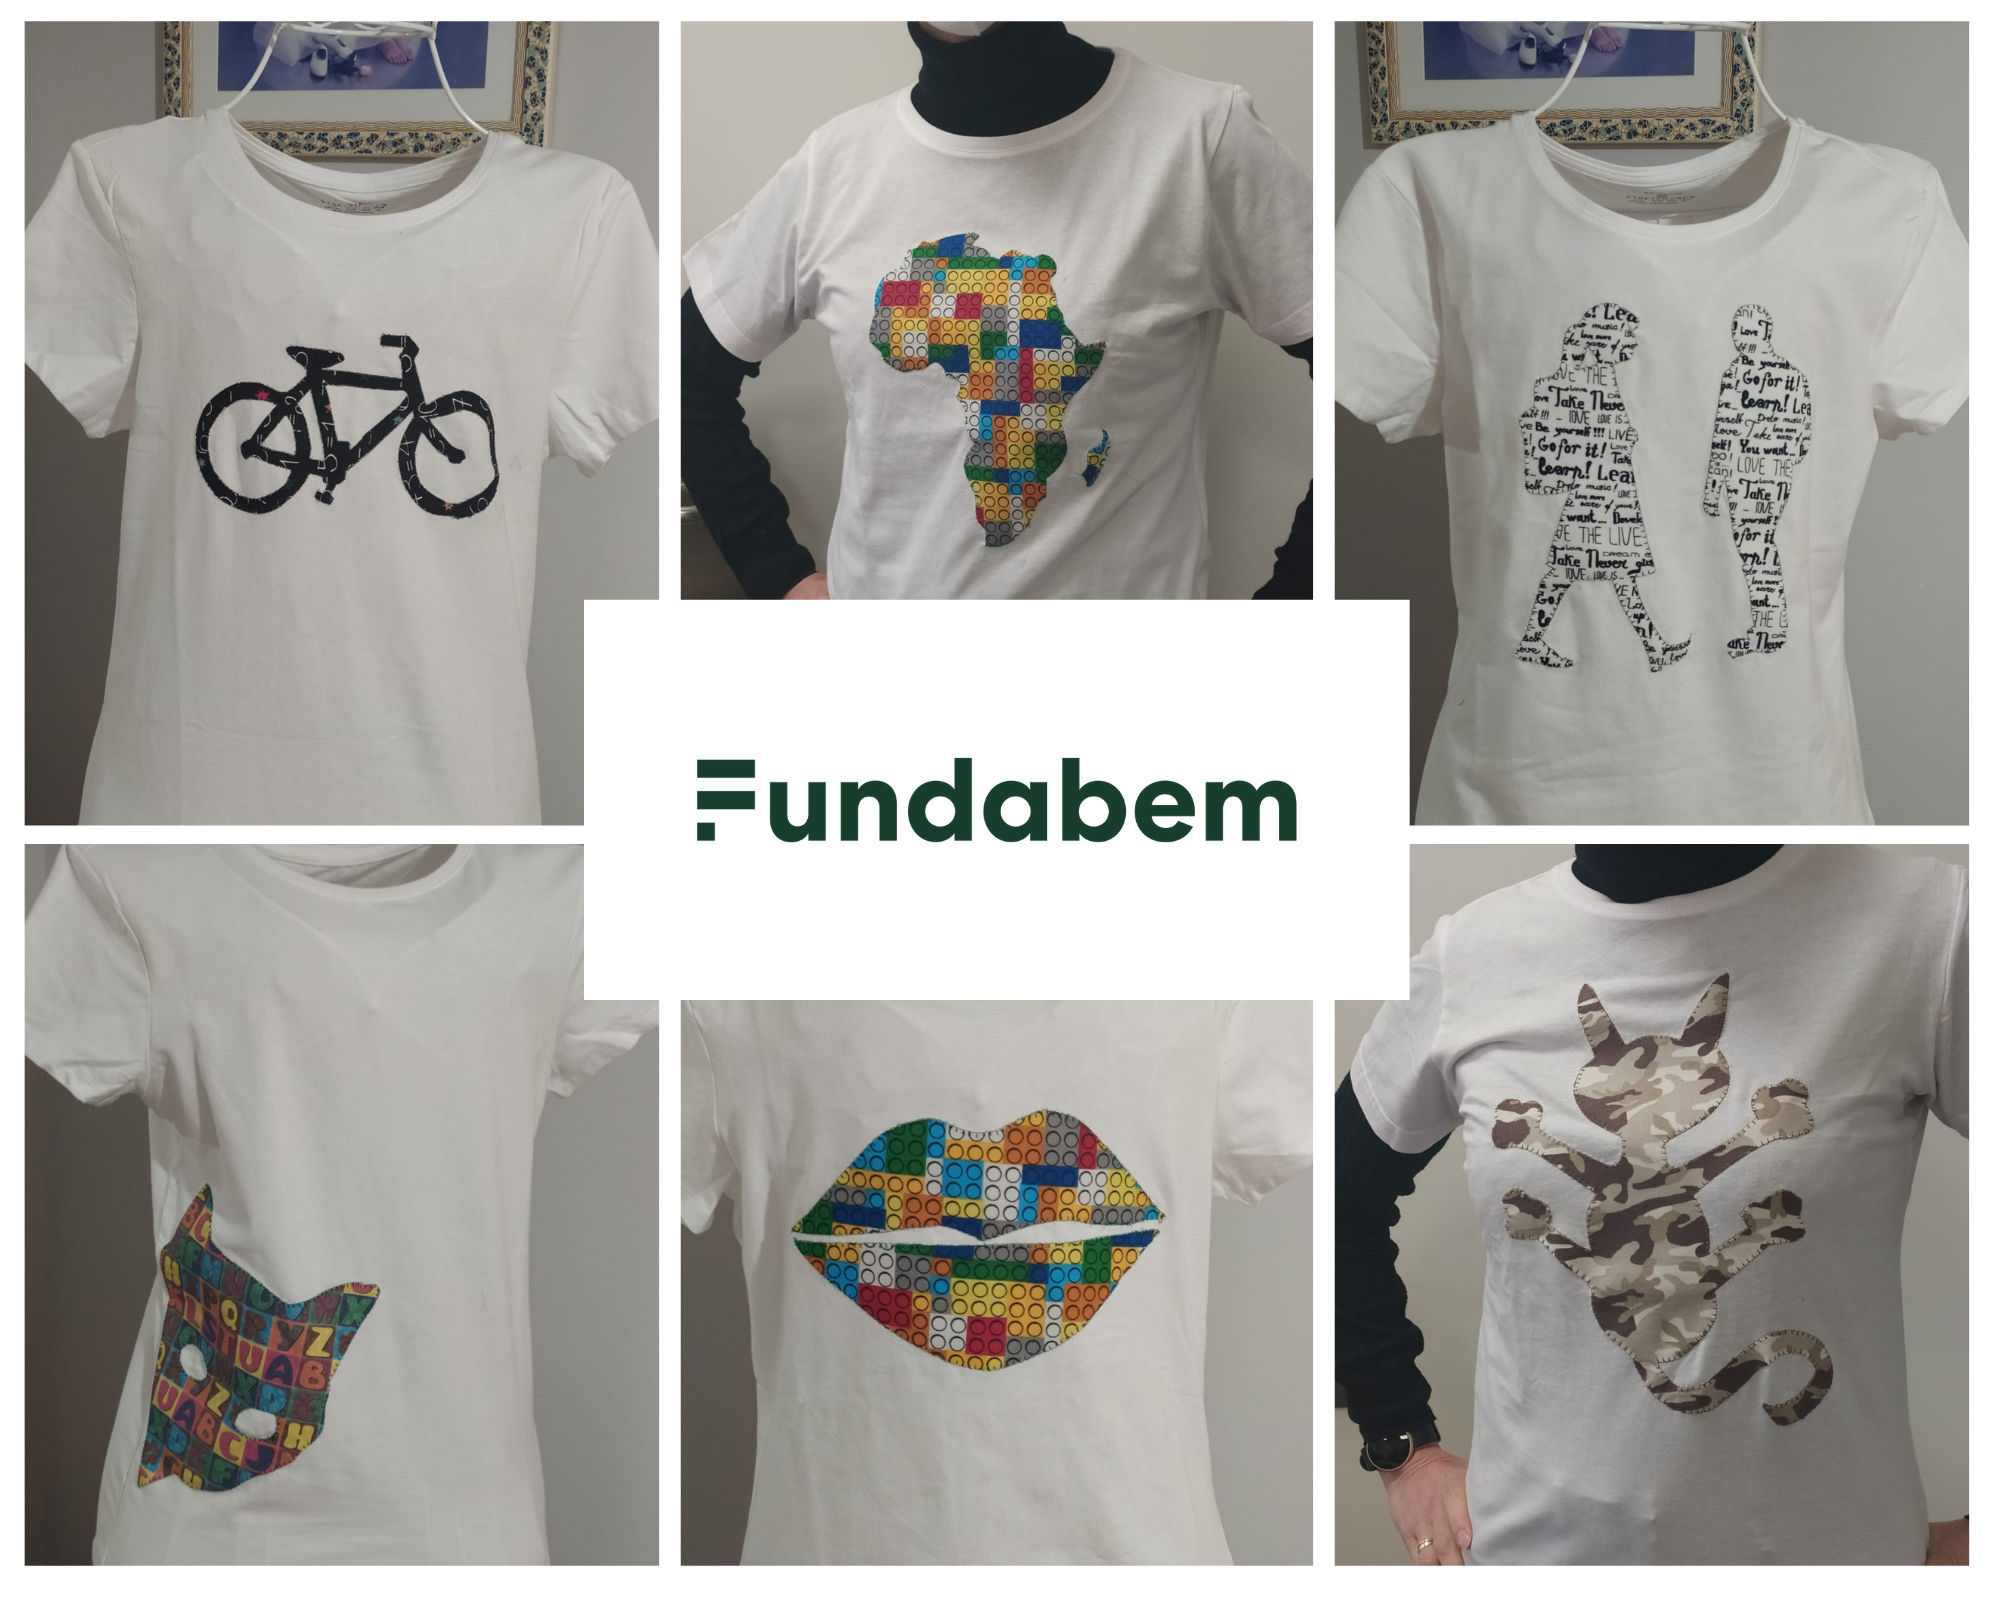 Camisetas con diferentes adornos (gatos, labios, figuras humanas, continentes,…).